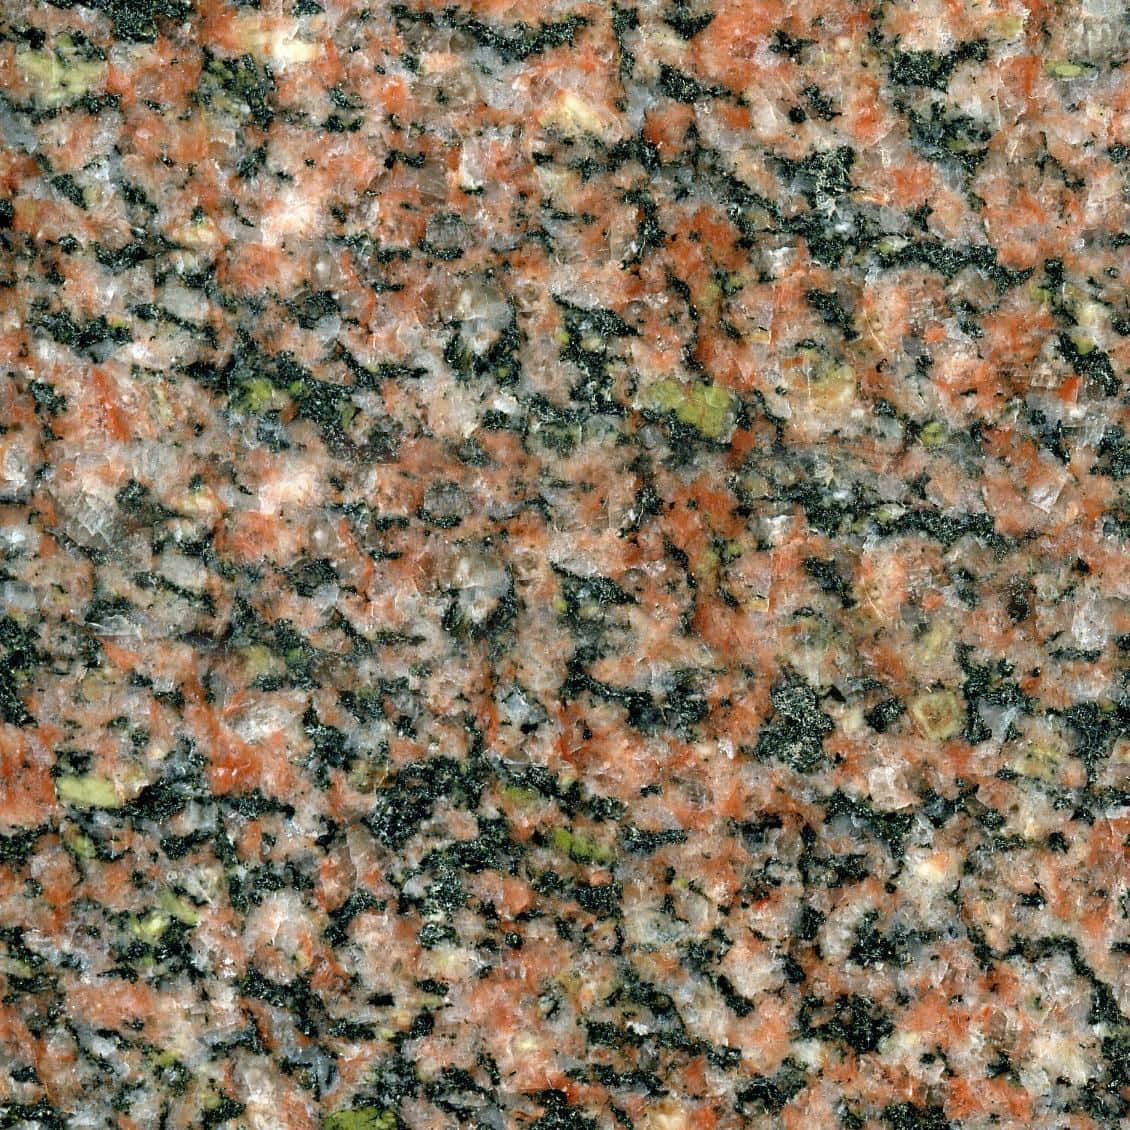 Textured, multi-coloured granite rock